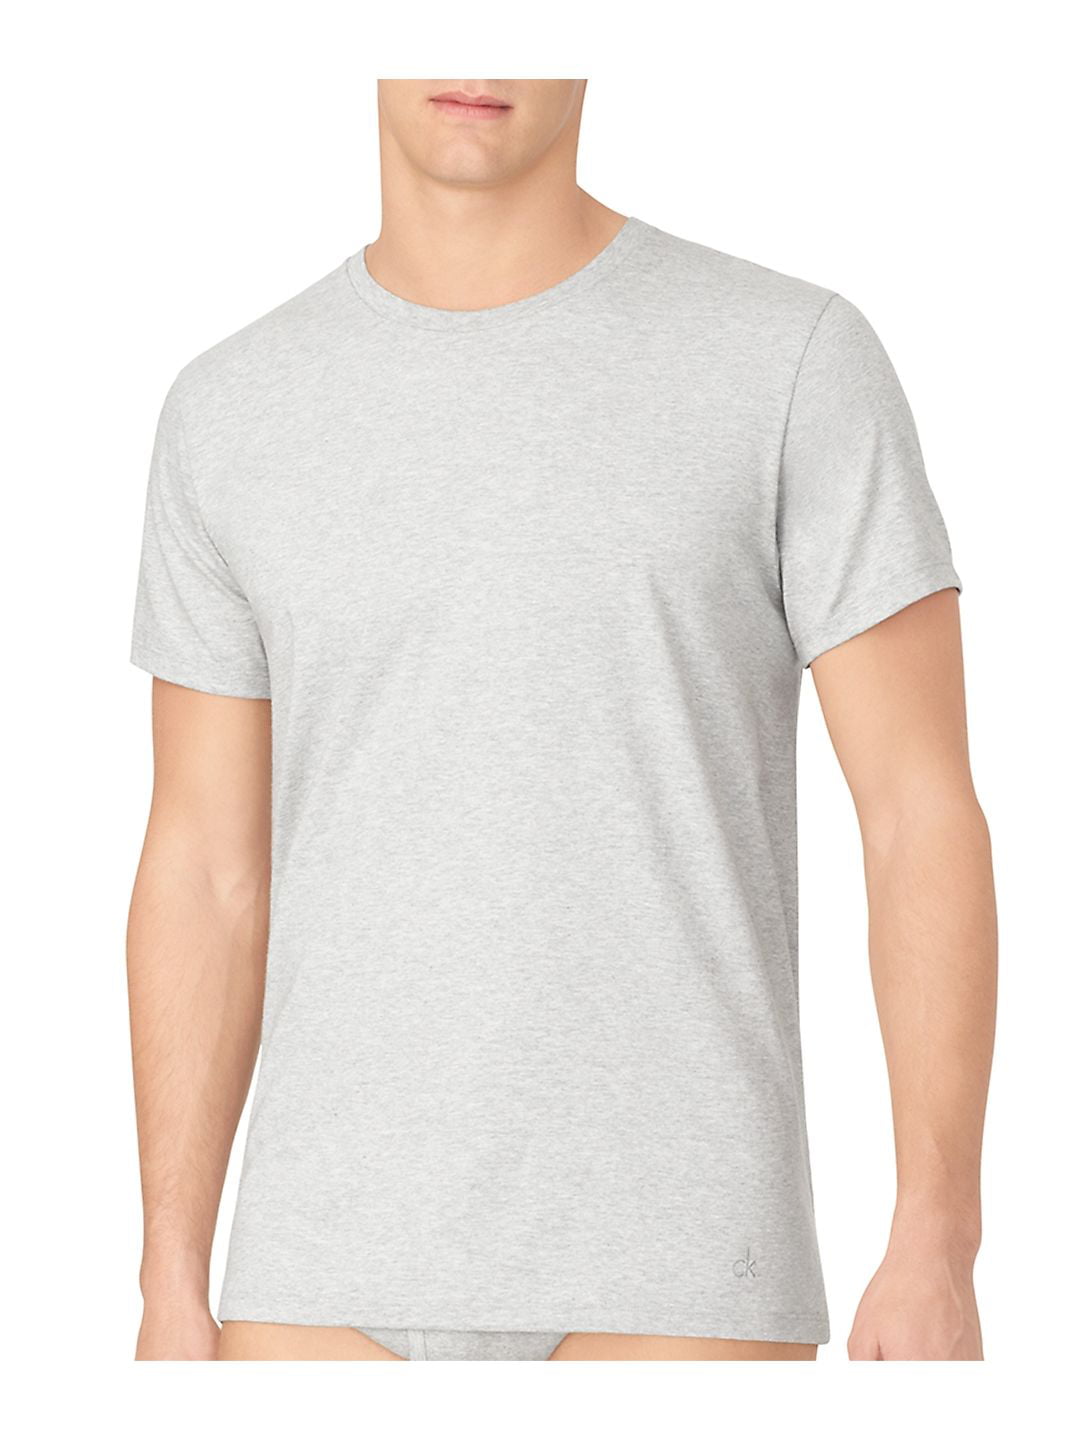 CALVIN KLEIN T Shirt Mens Large L Grey Short Sleeve Basic Casual Cotton Blend 